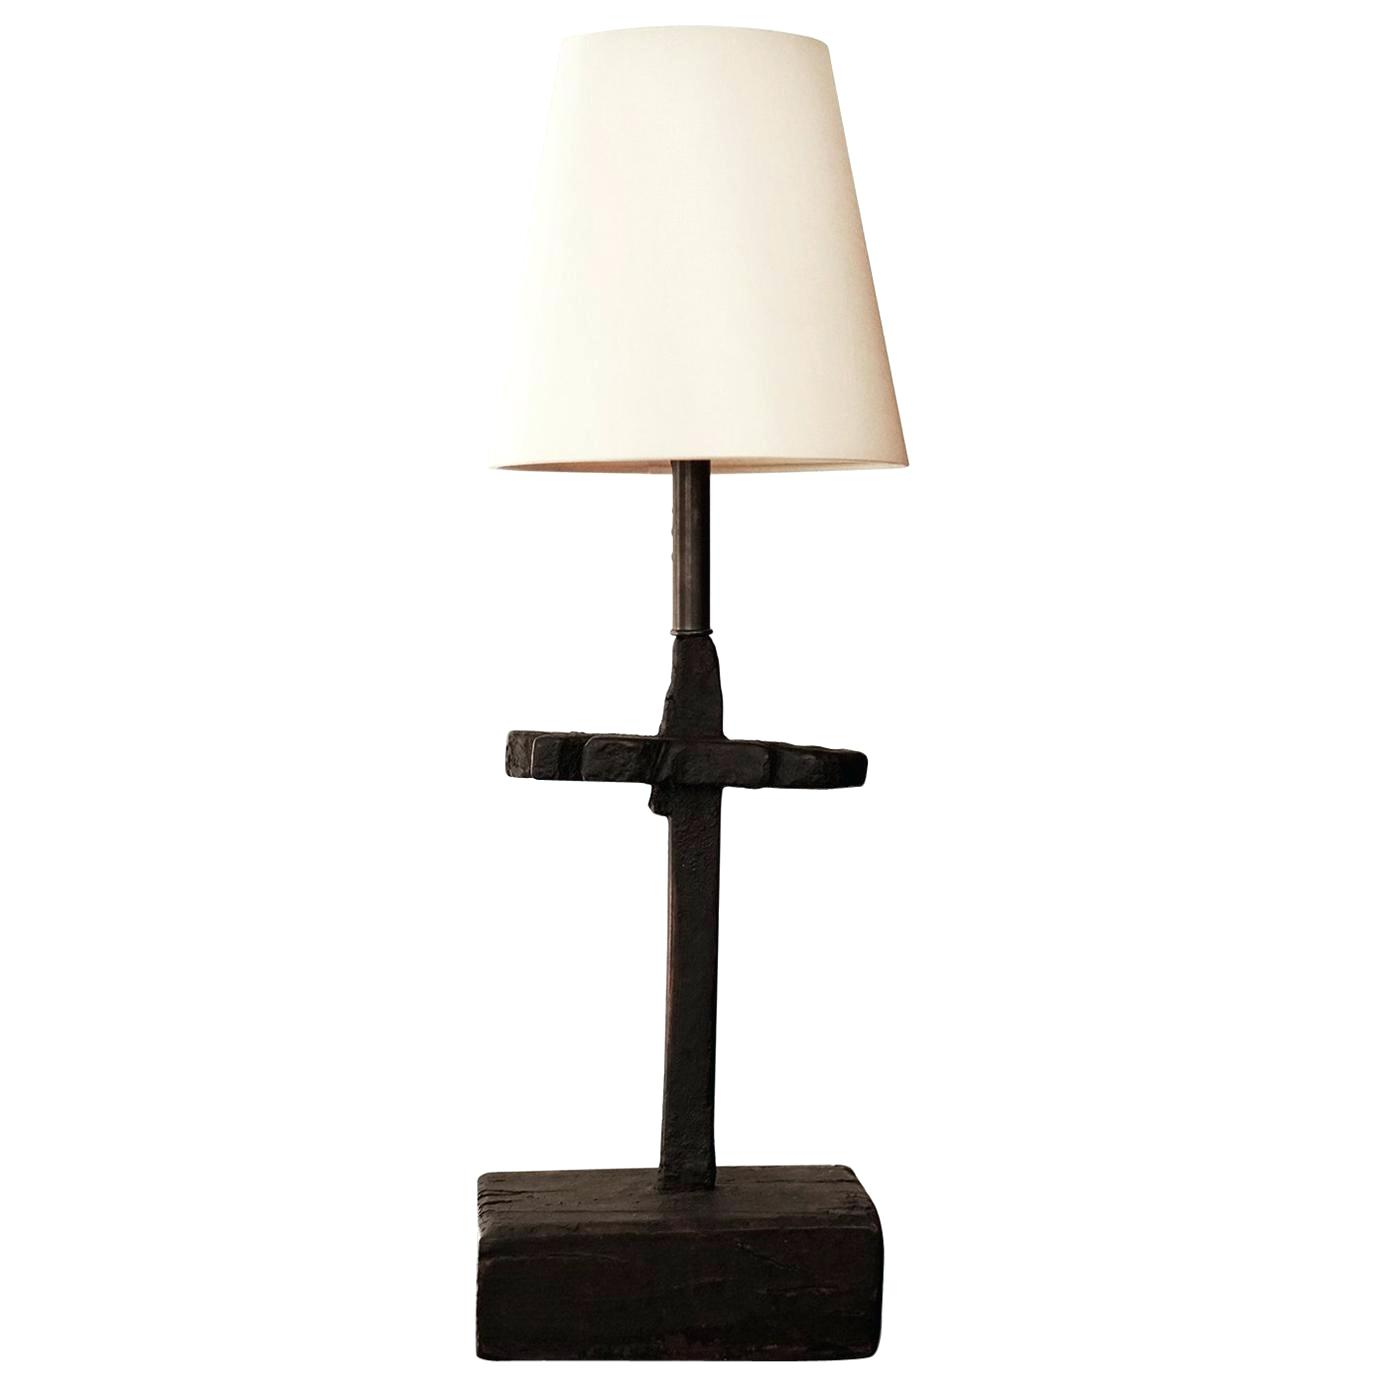 Primitive Table Lamp Ccpress throughout size 1385 X 1385